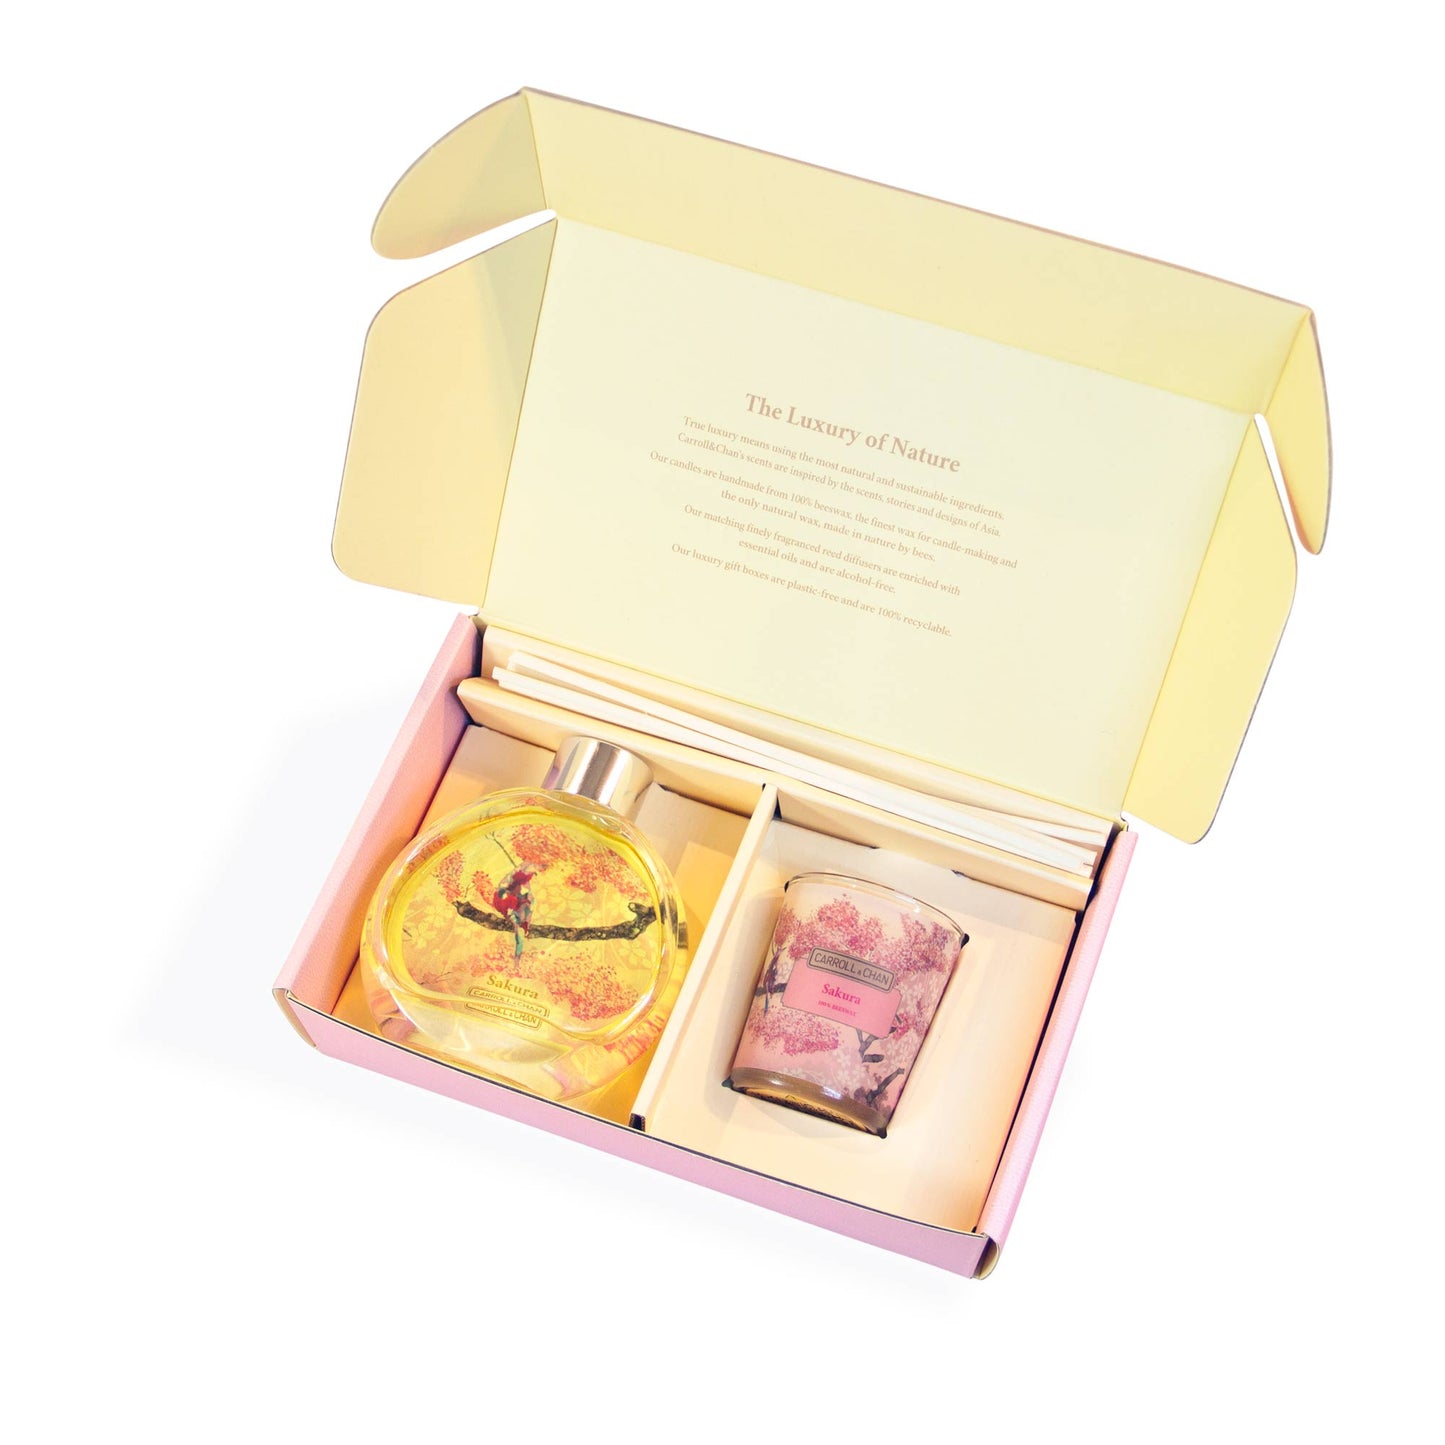 Sakura special edition gift set